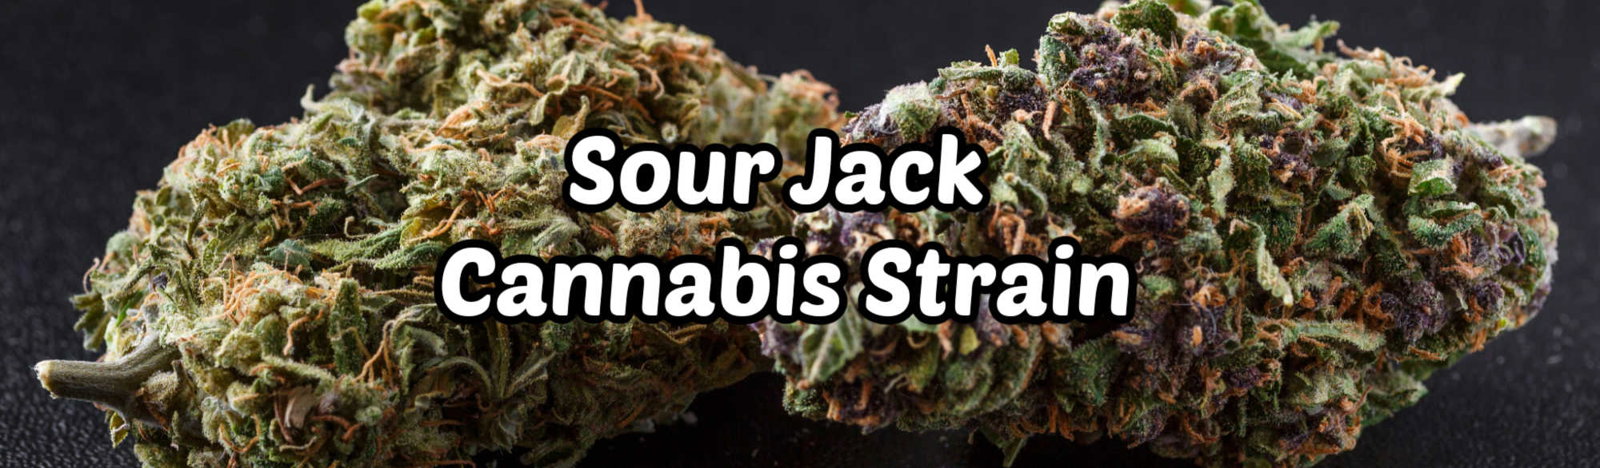 image of sour jack cannabis strain